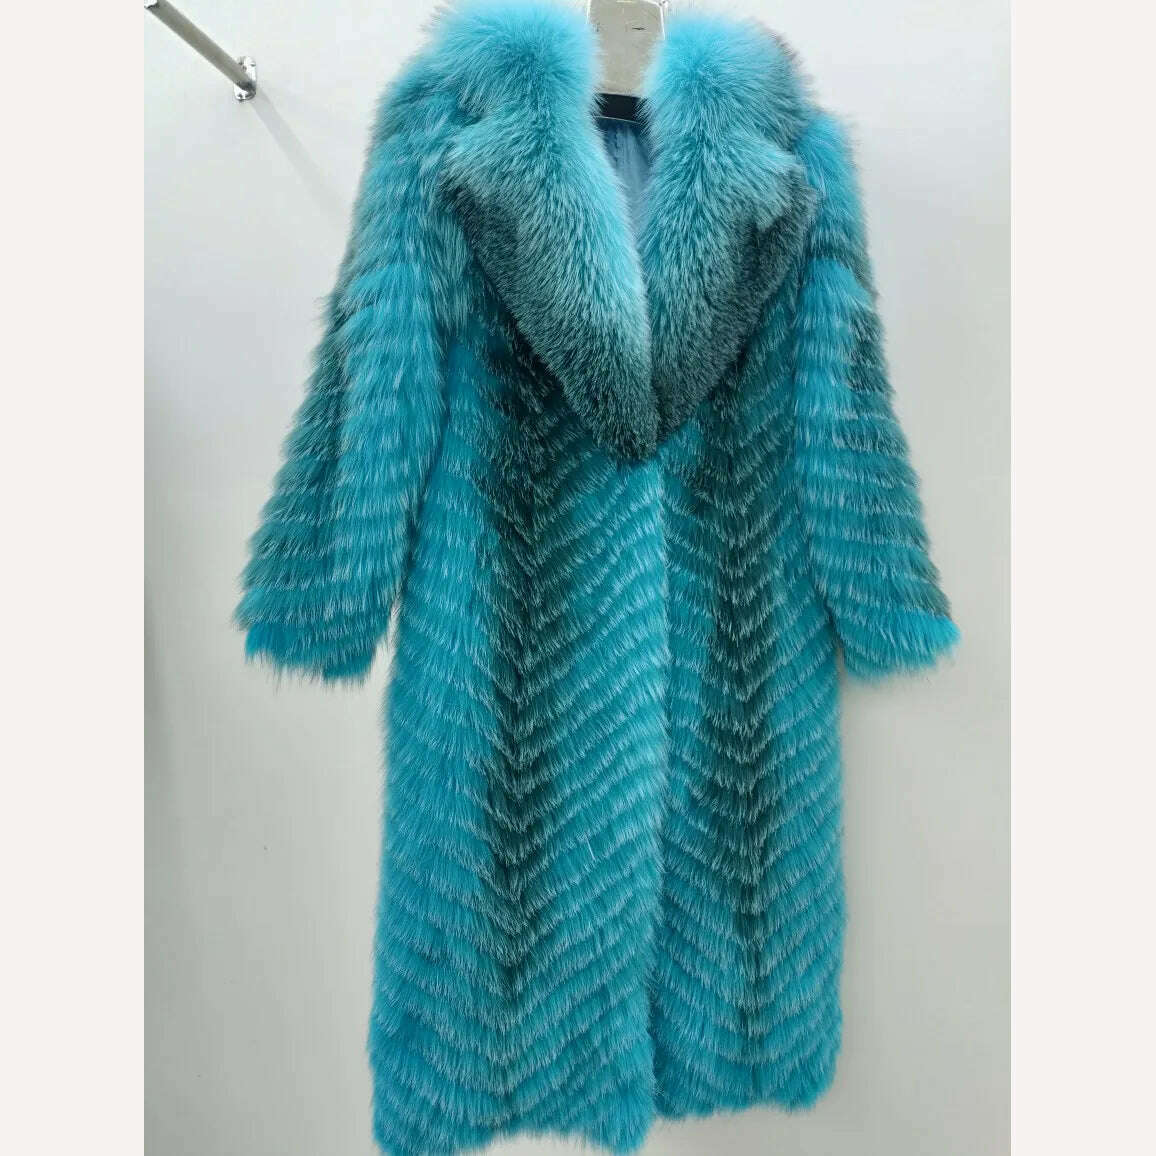 KIMLUD, Winter Long High Quality Real Cross Fox Fur Coat Women X-Length With Big Hood Pink Fashion Thicken Warm Fur Jacket Female, KIMLUD Women's Clothes